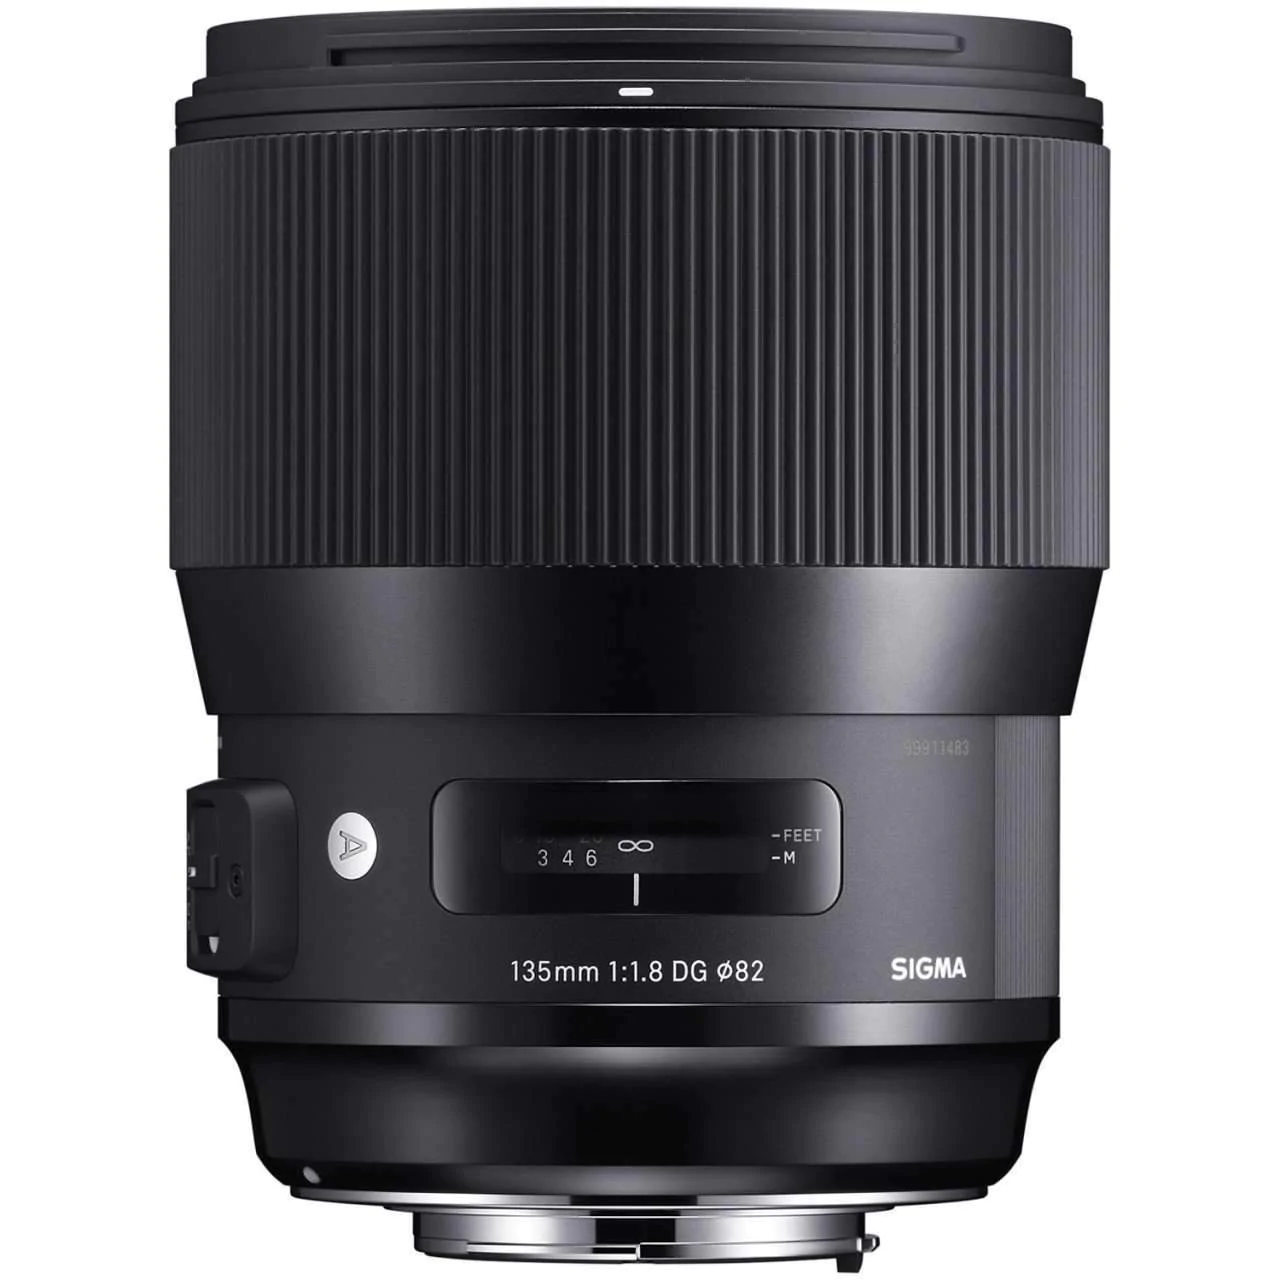 Sigma 135mm f/1.8 DG HSM Art Lens for Canon EF Sigma Lens - DSLR Fixed Focal Length